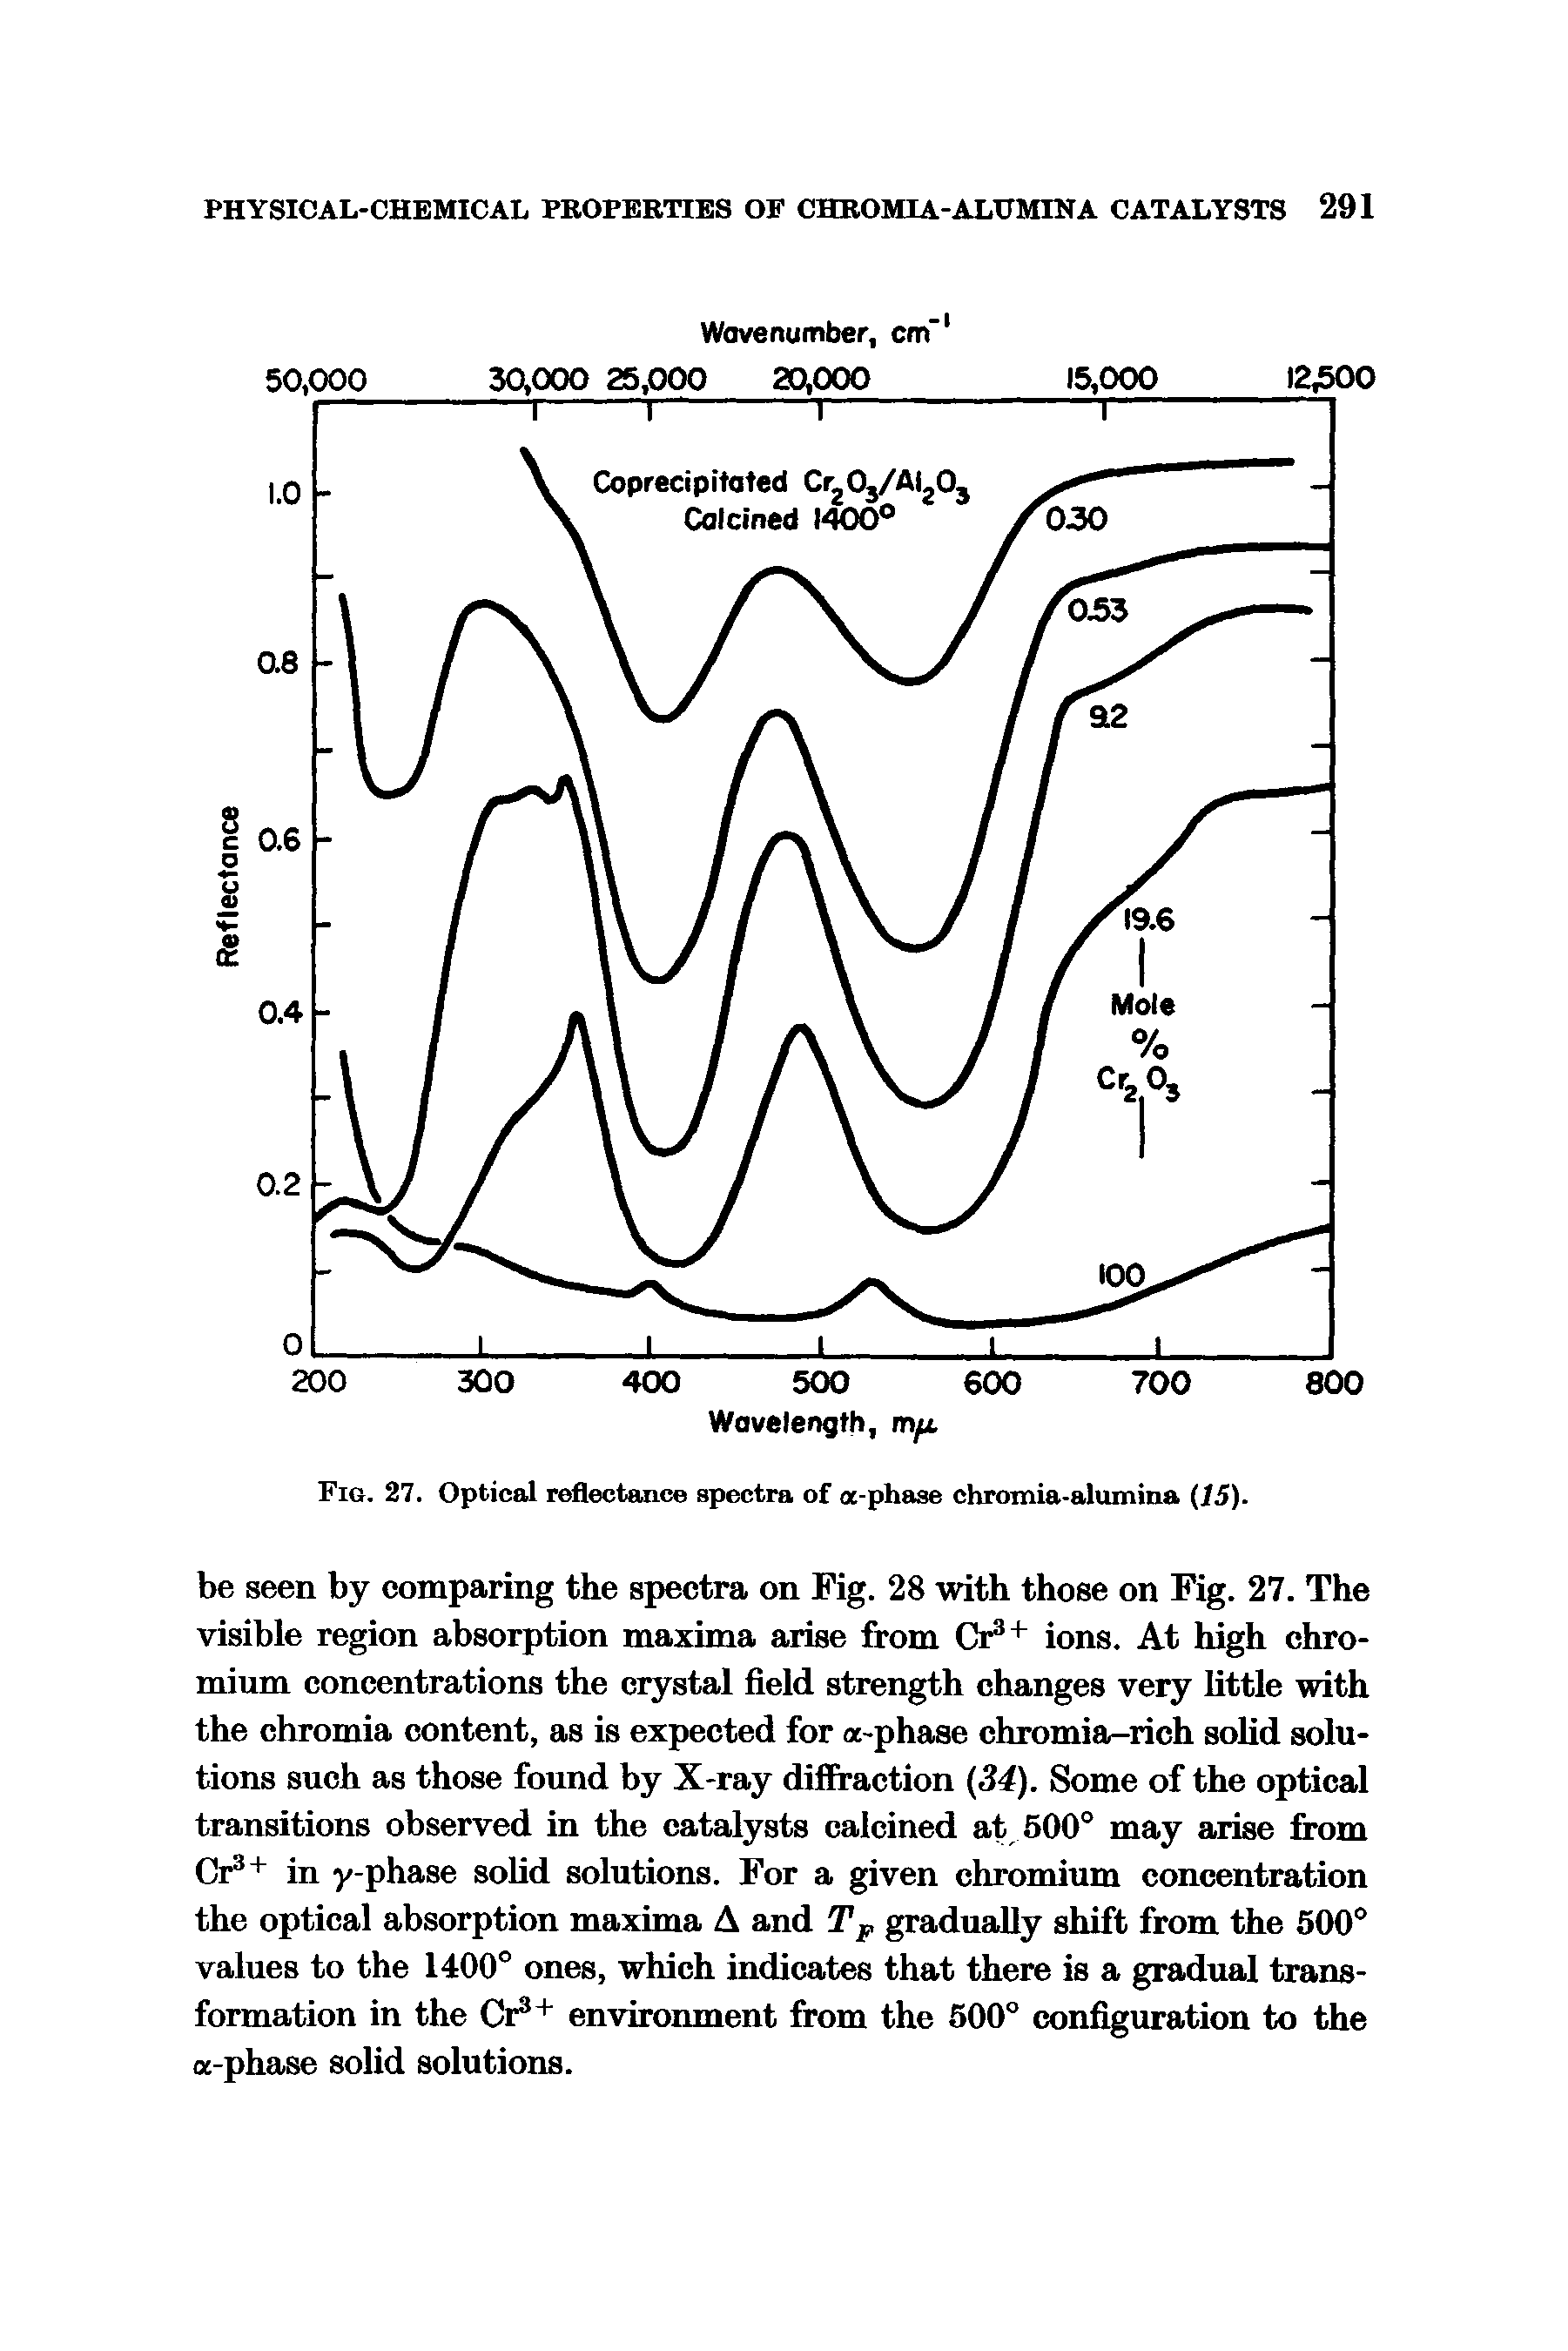 Fig. 27. Optical reflectance spectra of a-phase chromia-alumiiia (15).